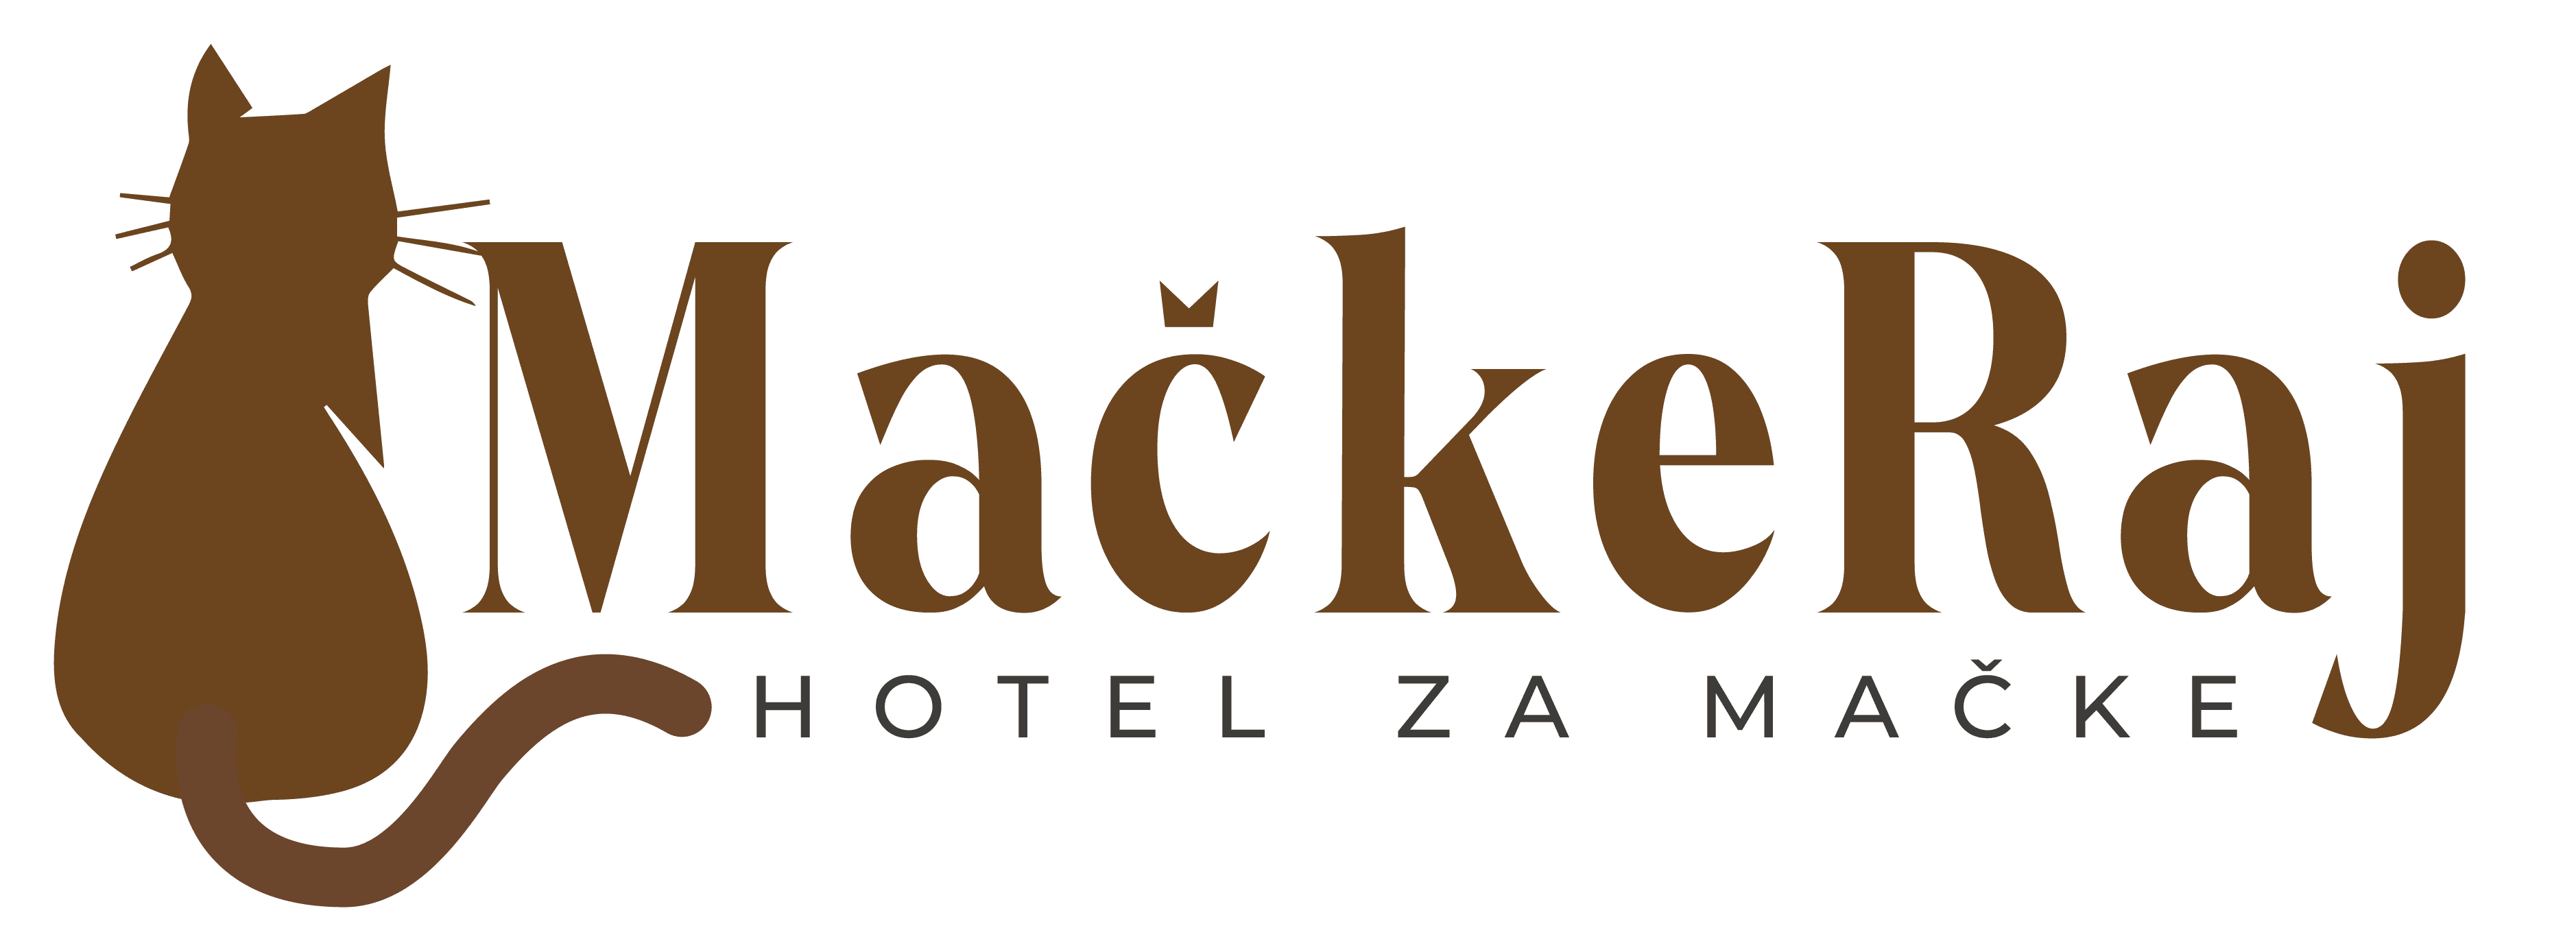 MackeRaj logo